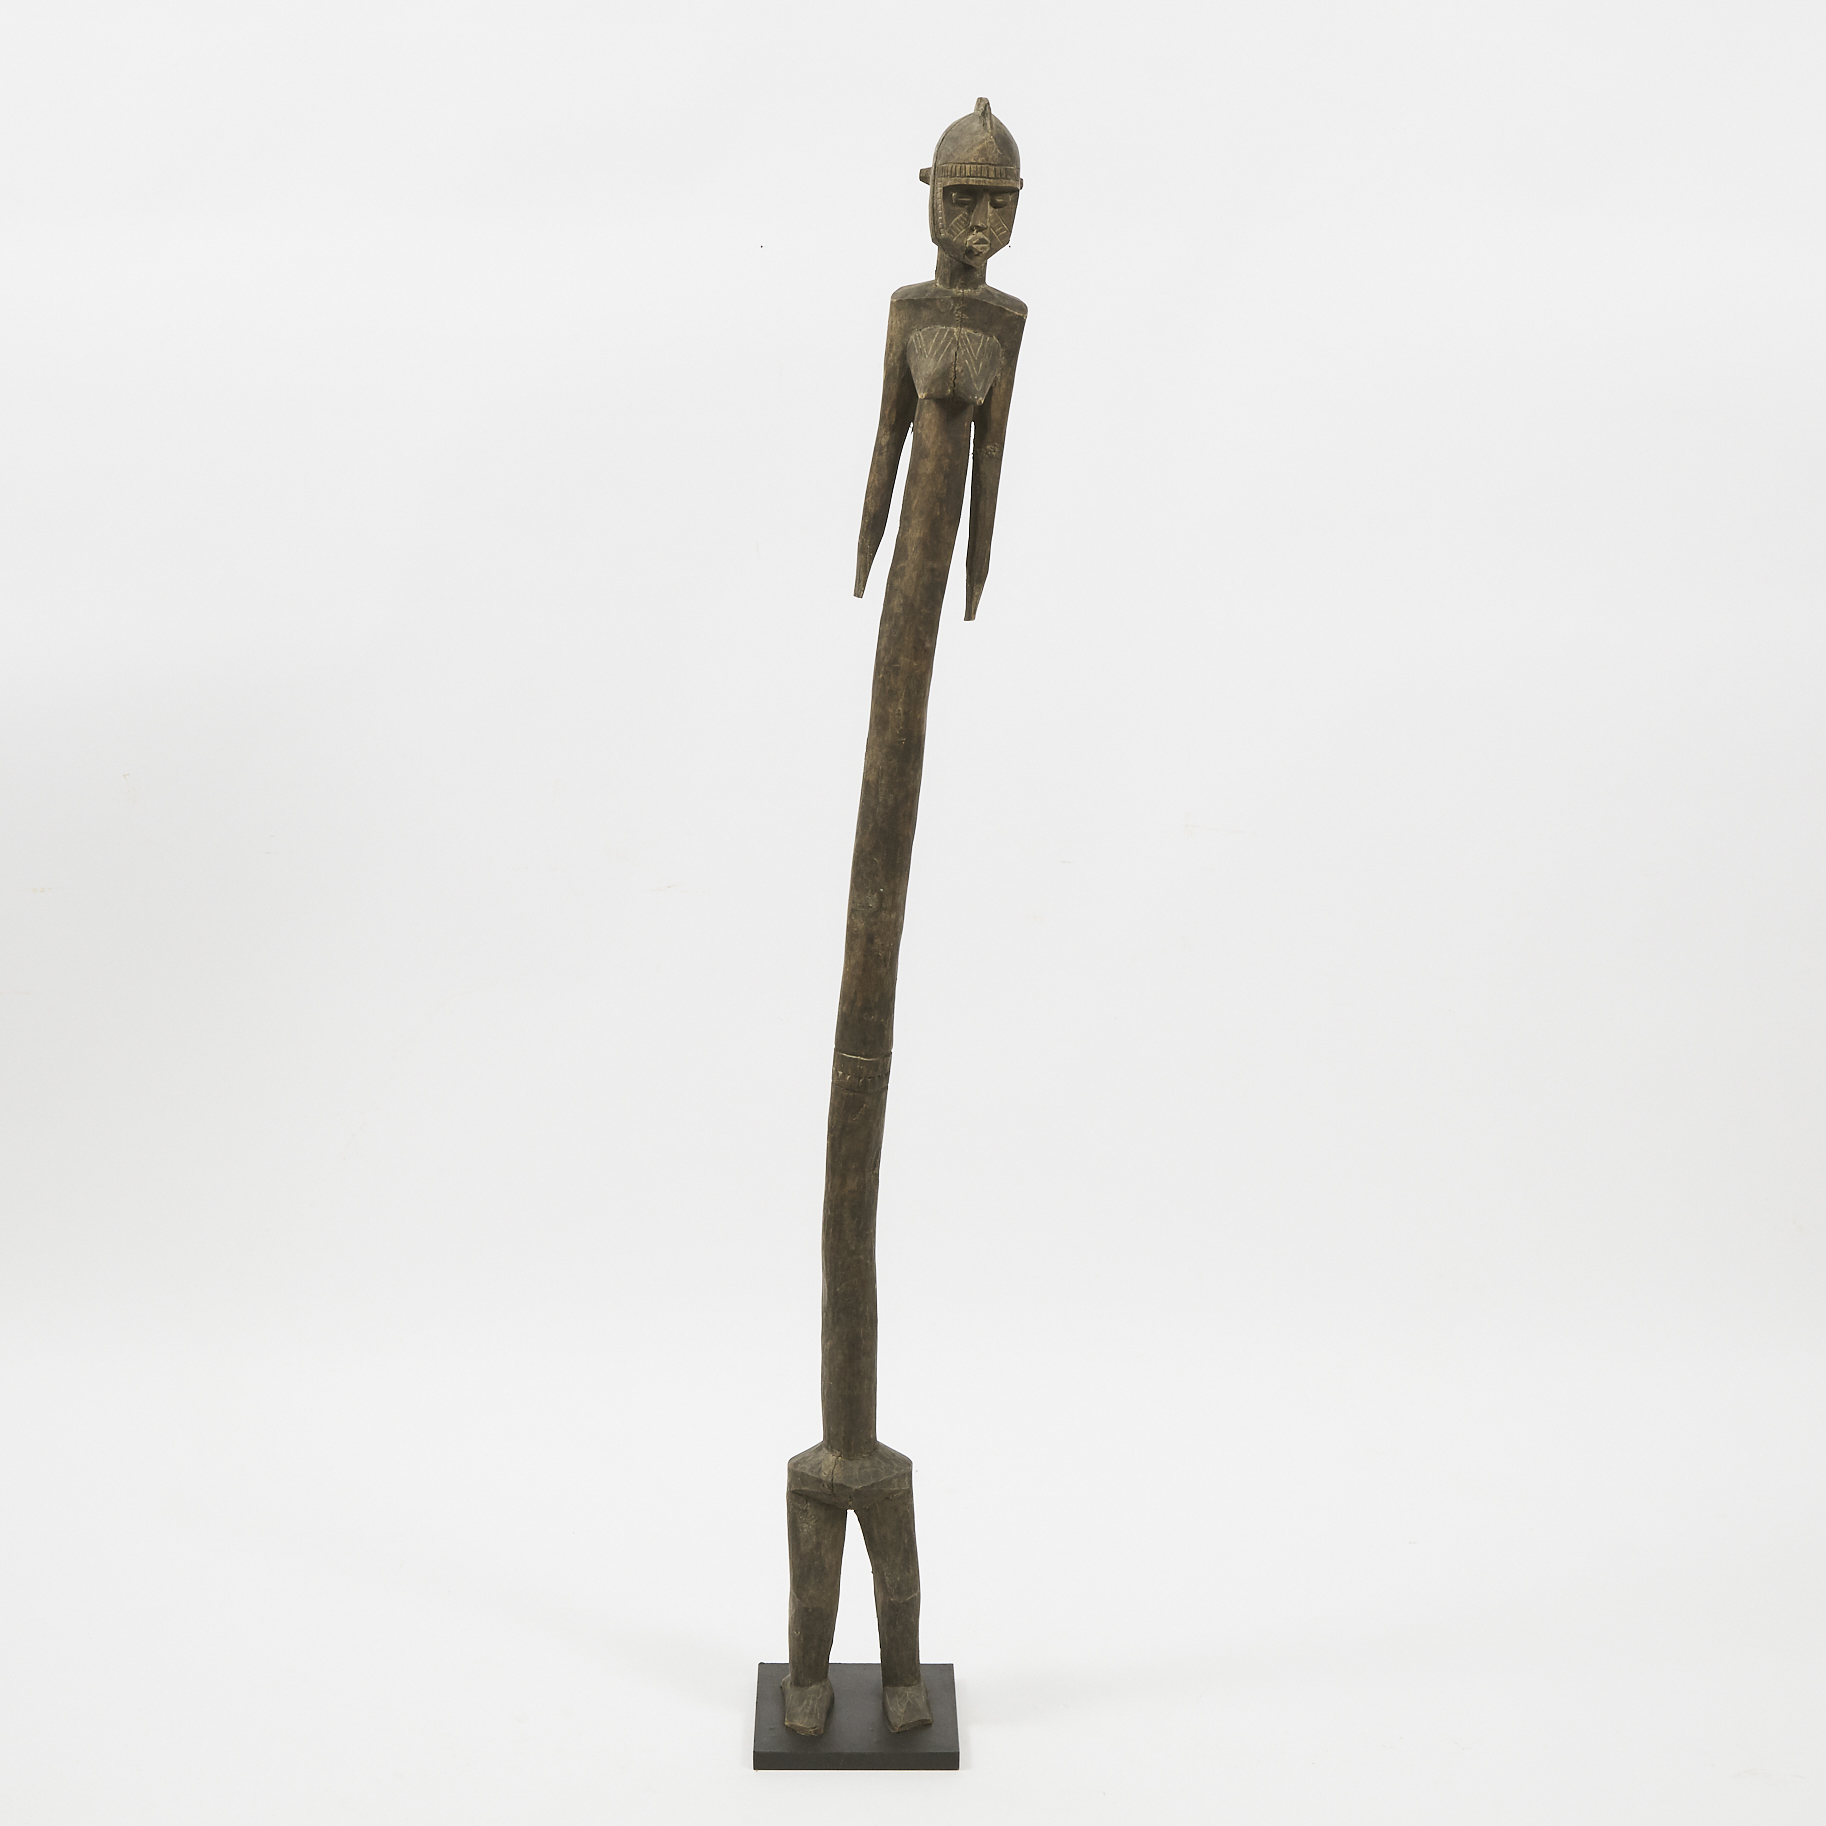 Mossi Figure, Burkina Faso, West Africa, late 20th century